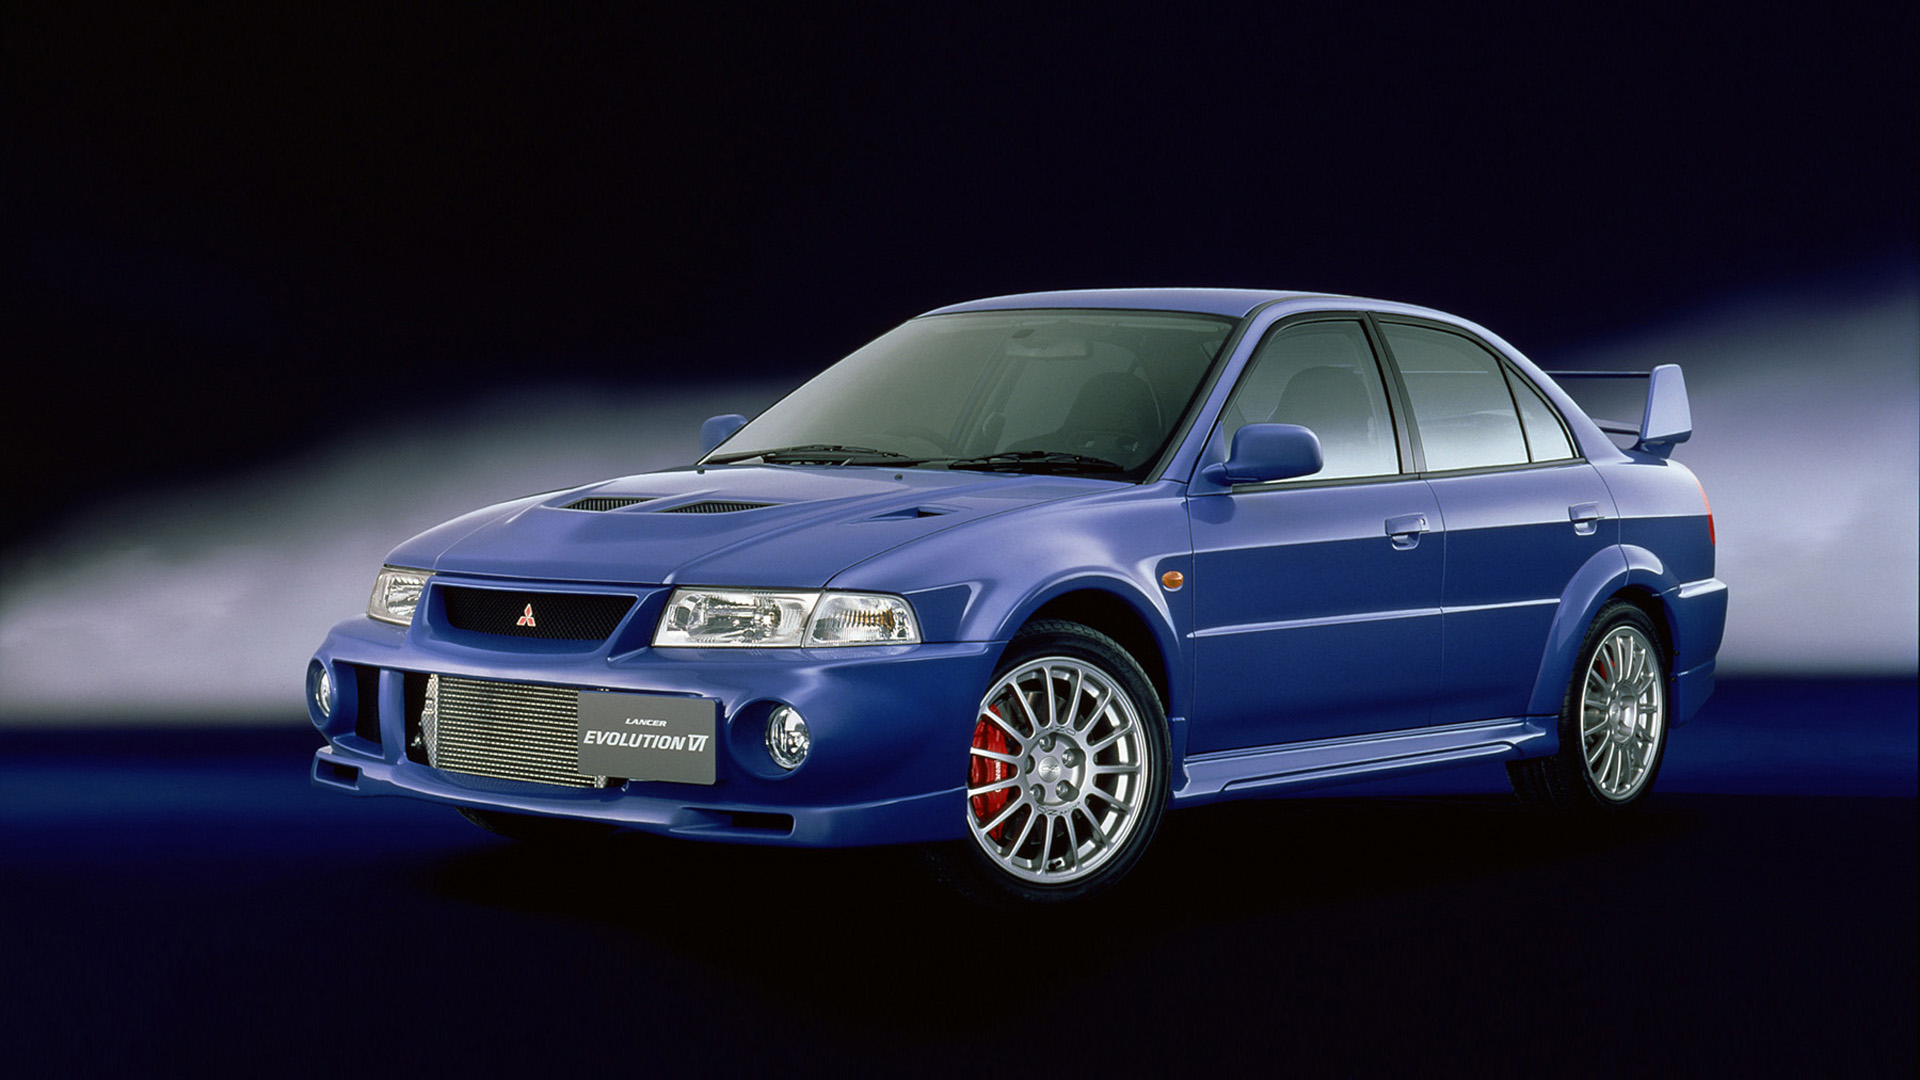 1999 Mitsubishi Lancer Gsr Evolution Vi Picture - 1999 Mitsubishi Lancer Evolution Vi , HD Wallpaper & Backgrounds